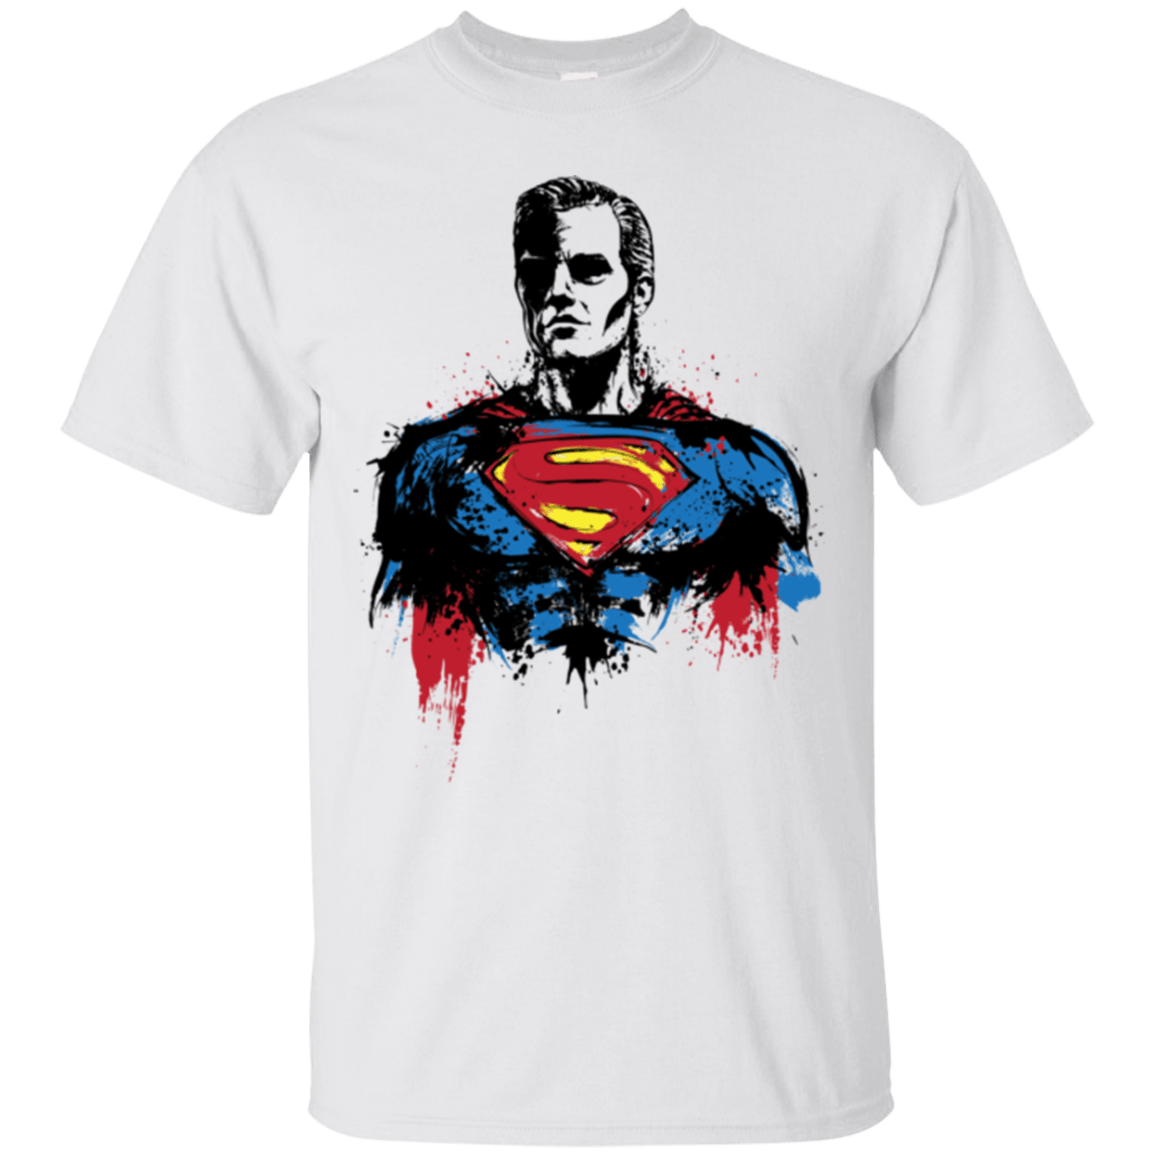 T-Shirts White / Small Return of Kryptonian T-Shirt